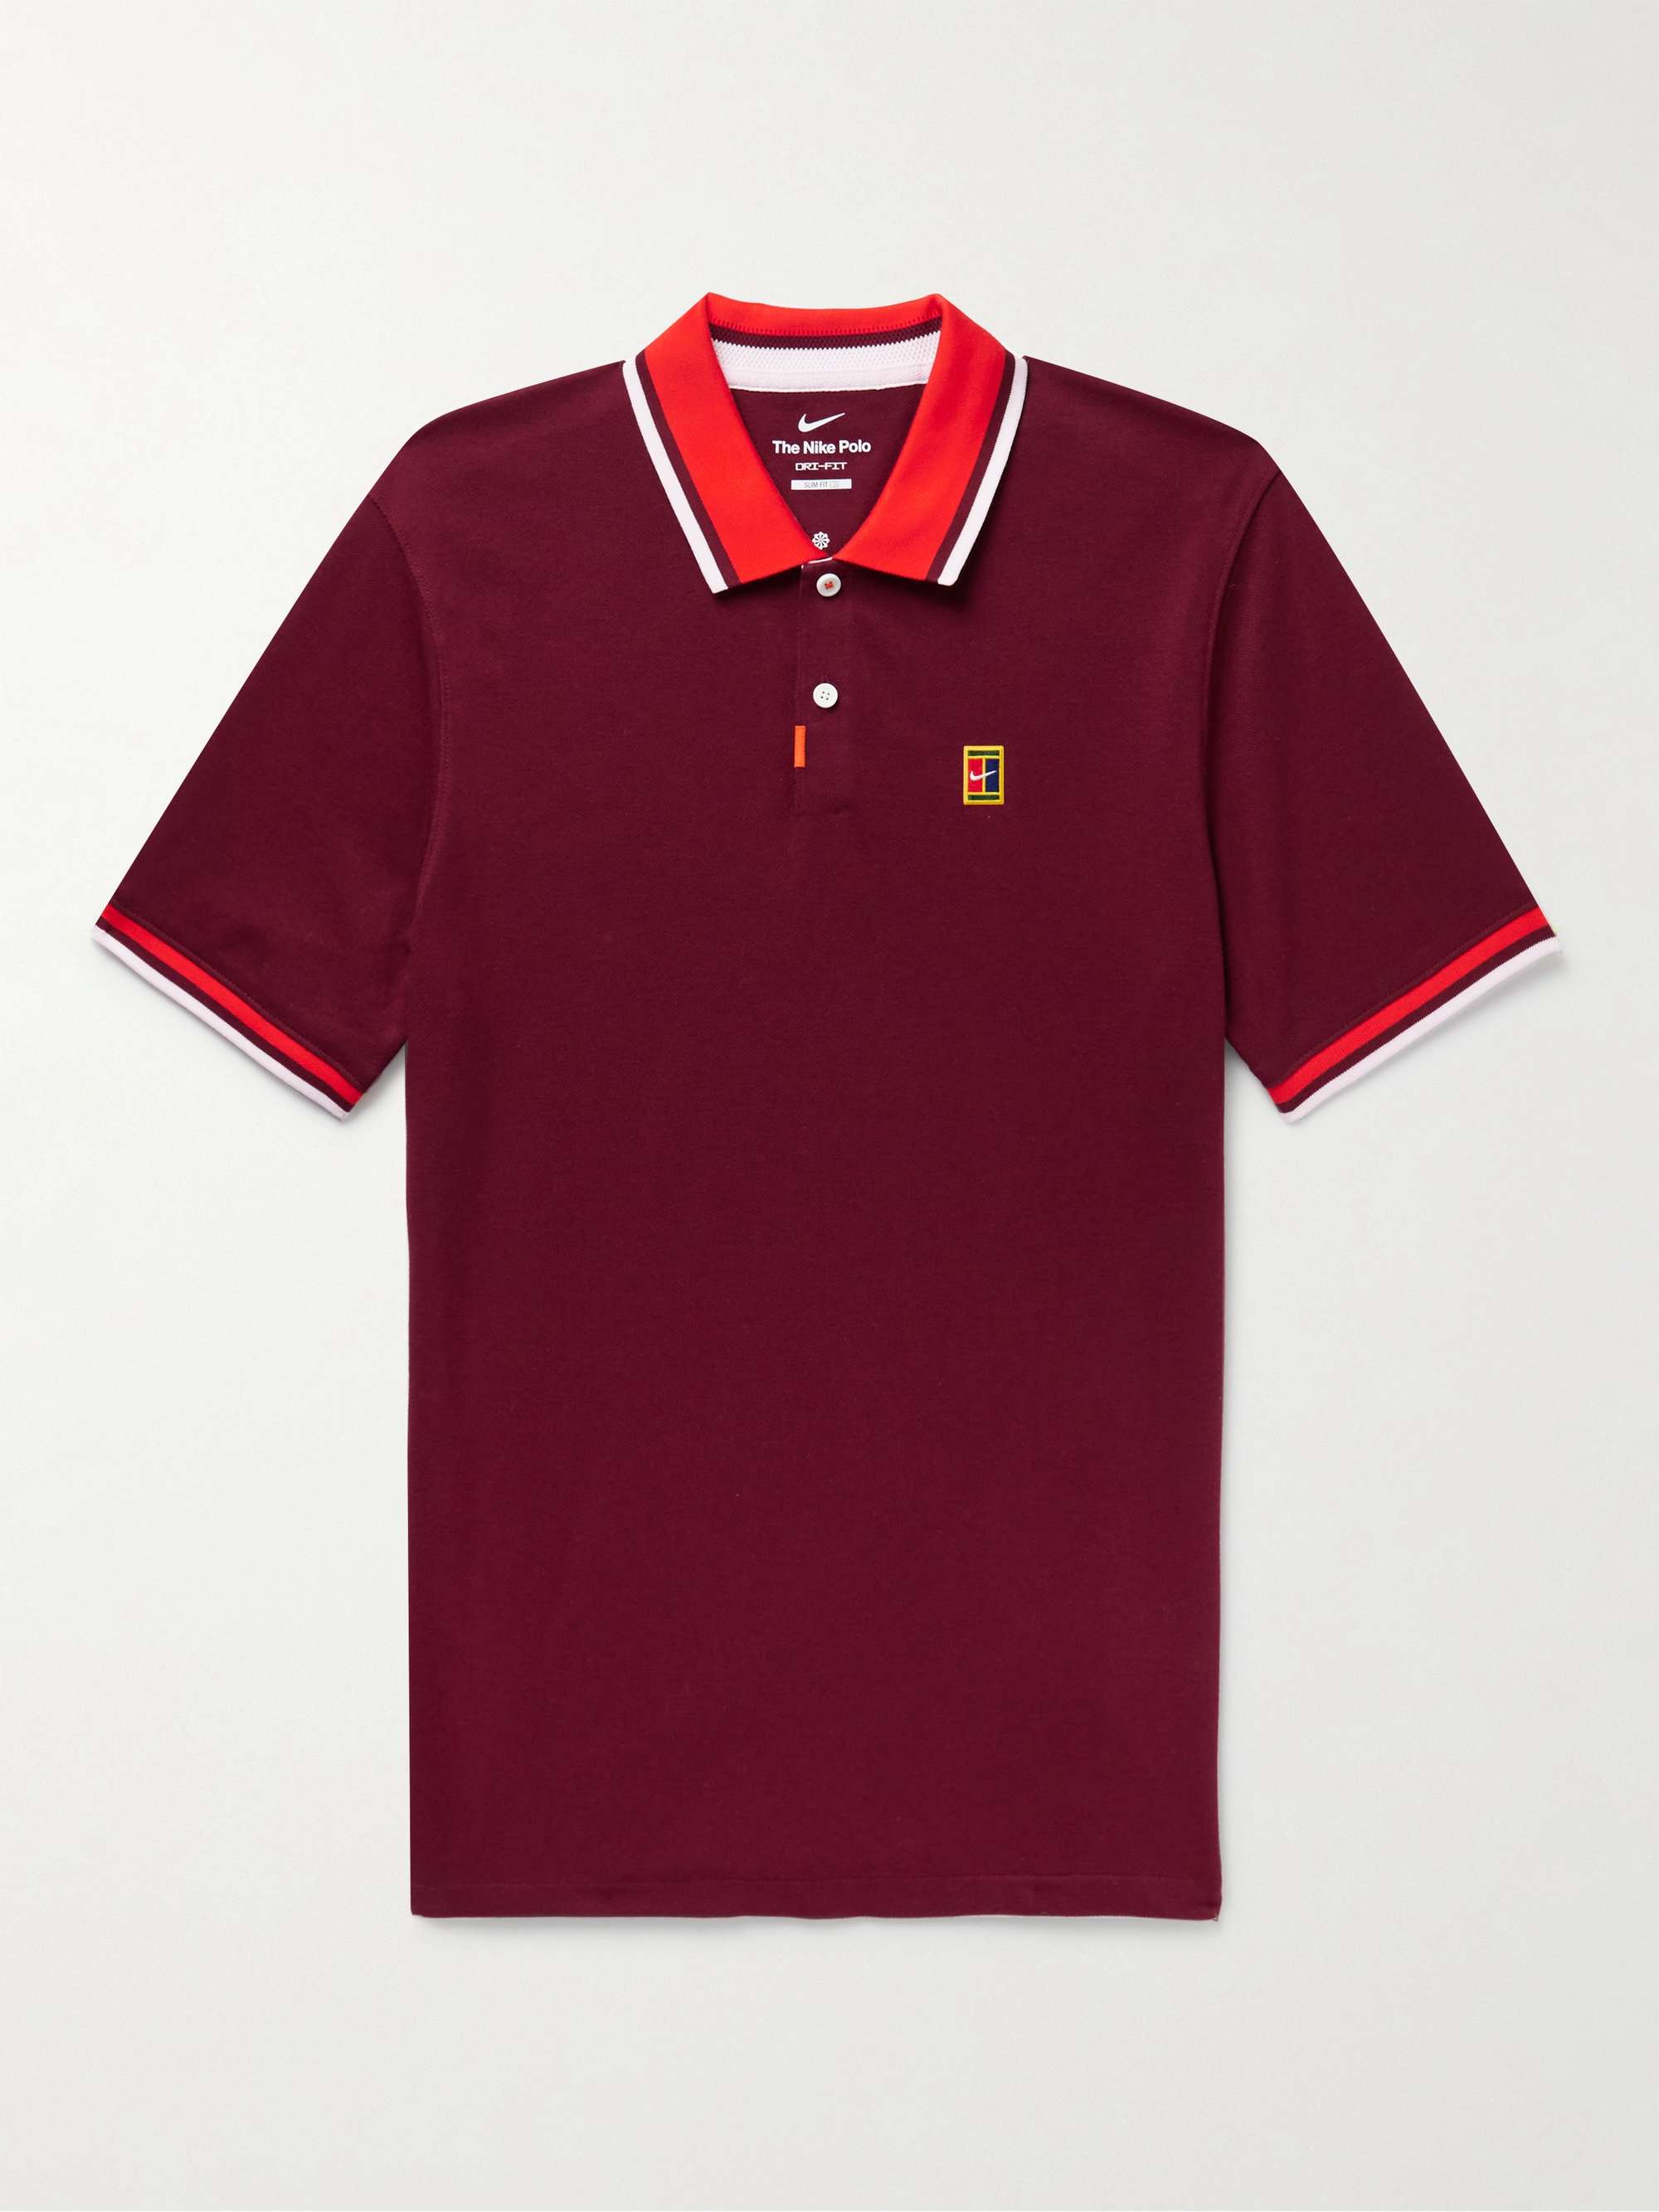 Red Slim-Fit Colour-Block Dri-FIT Piqué Tennis Polo Shirt | NIKE TENNIS |  MR PORTER